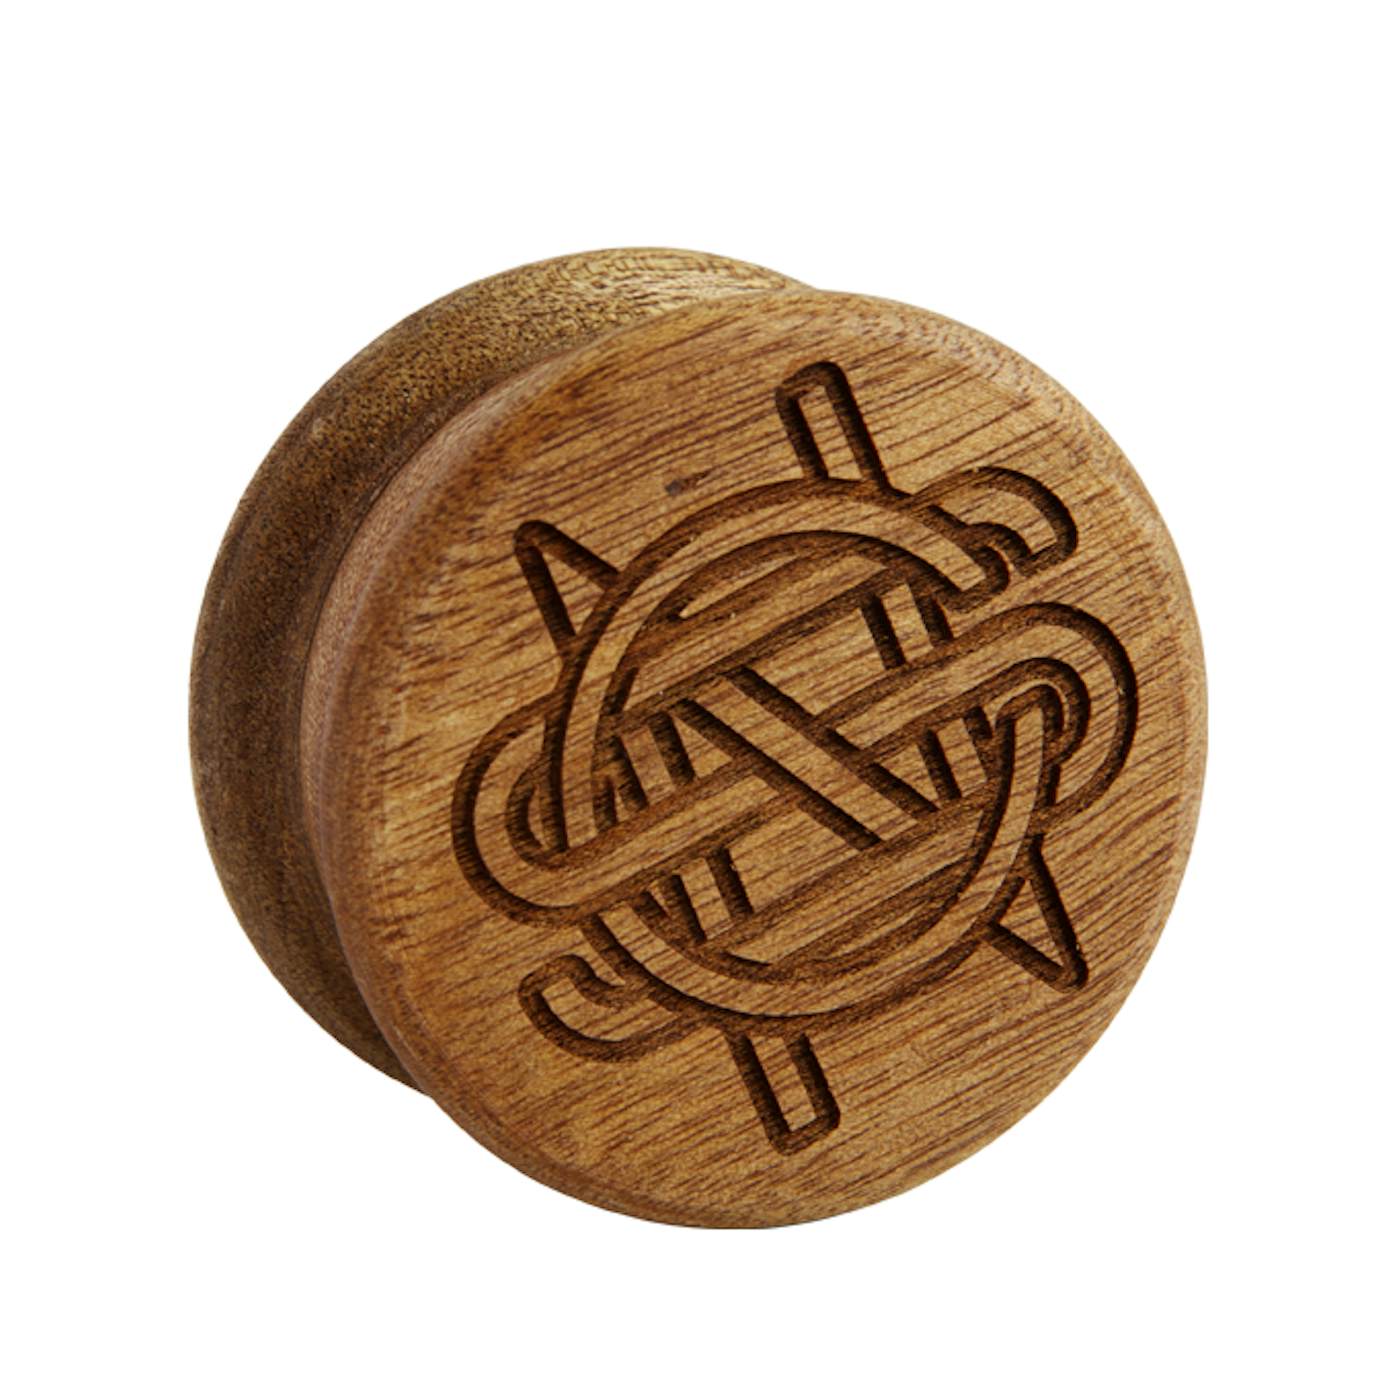 Crosby, Stills & Nash CSN "Engraved Initials" Wood Grinder